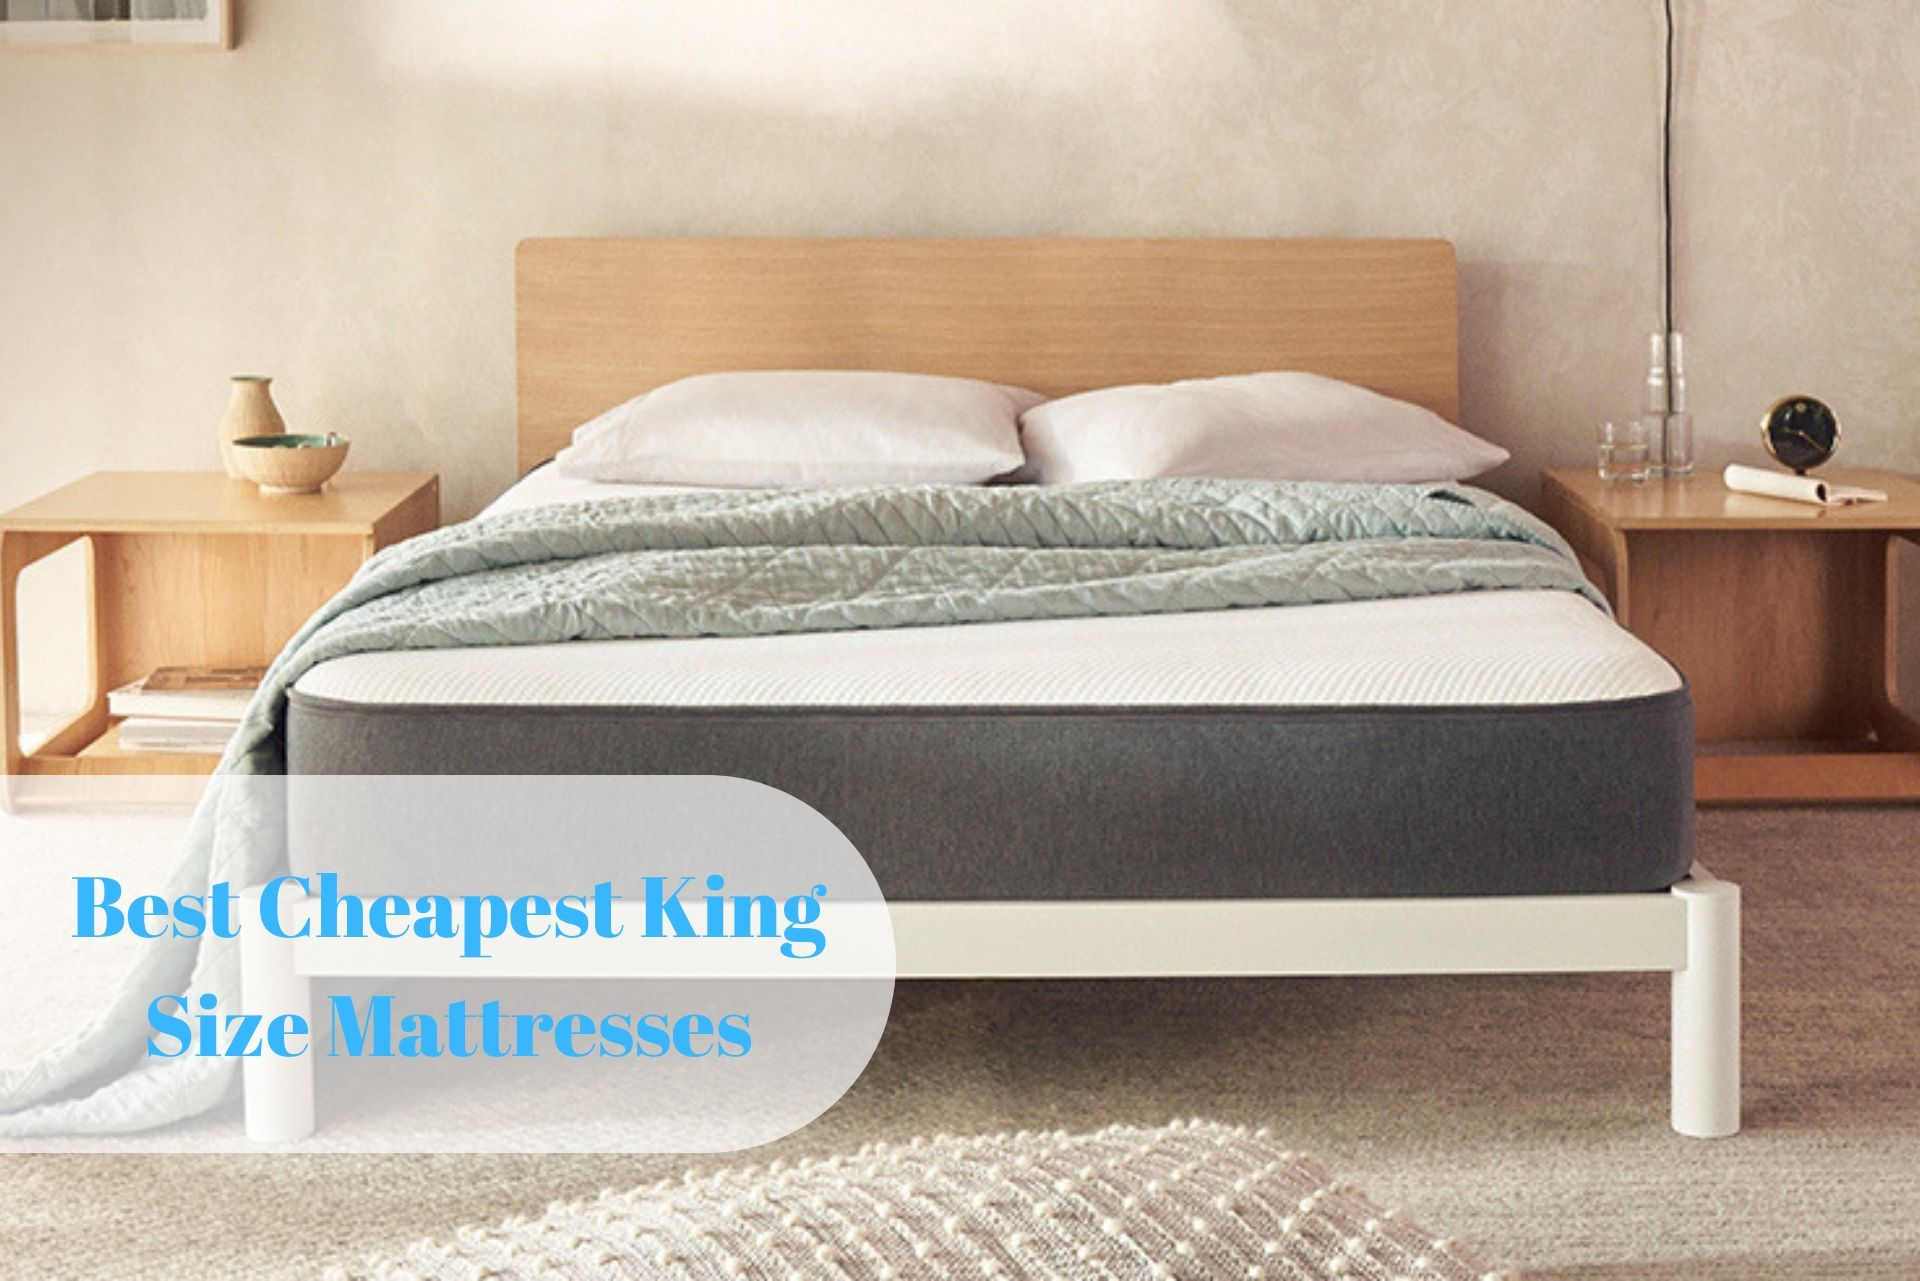 Best King Size Mattresses, Best King Size Bed Under $1000